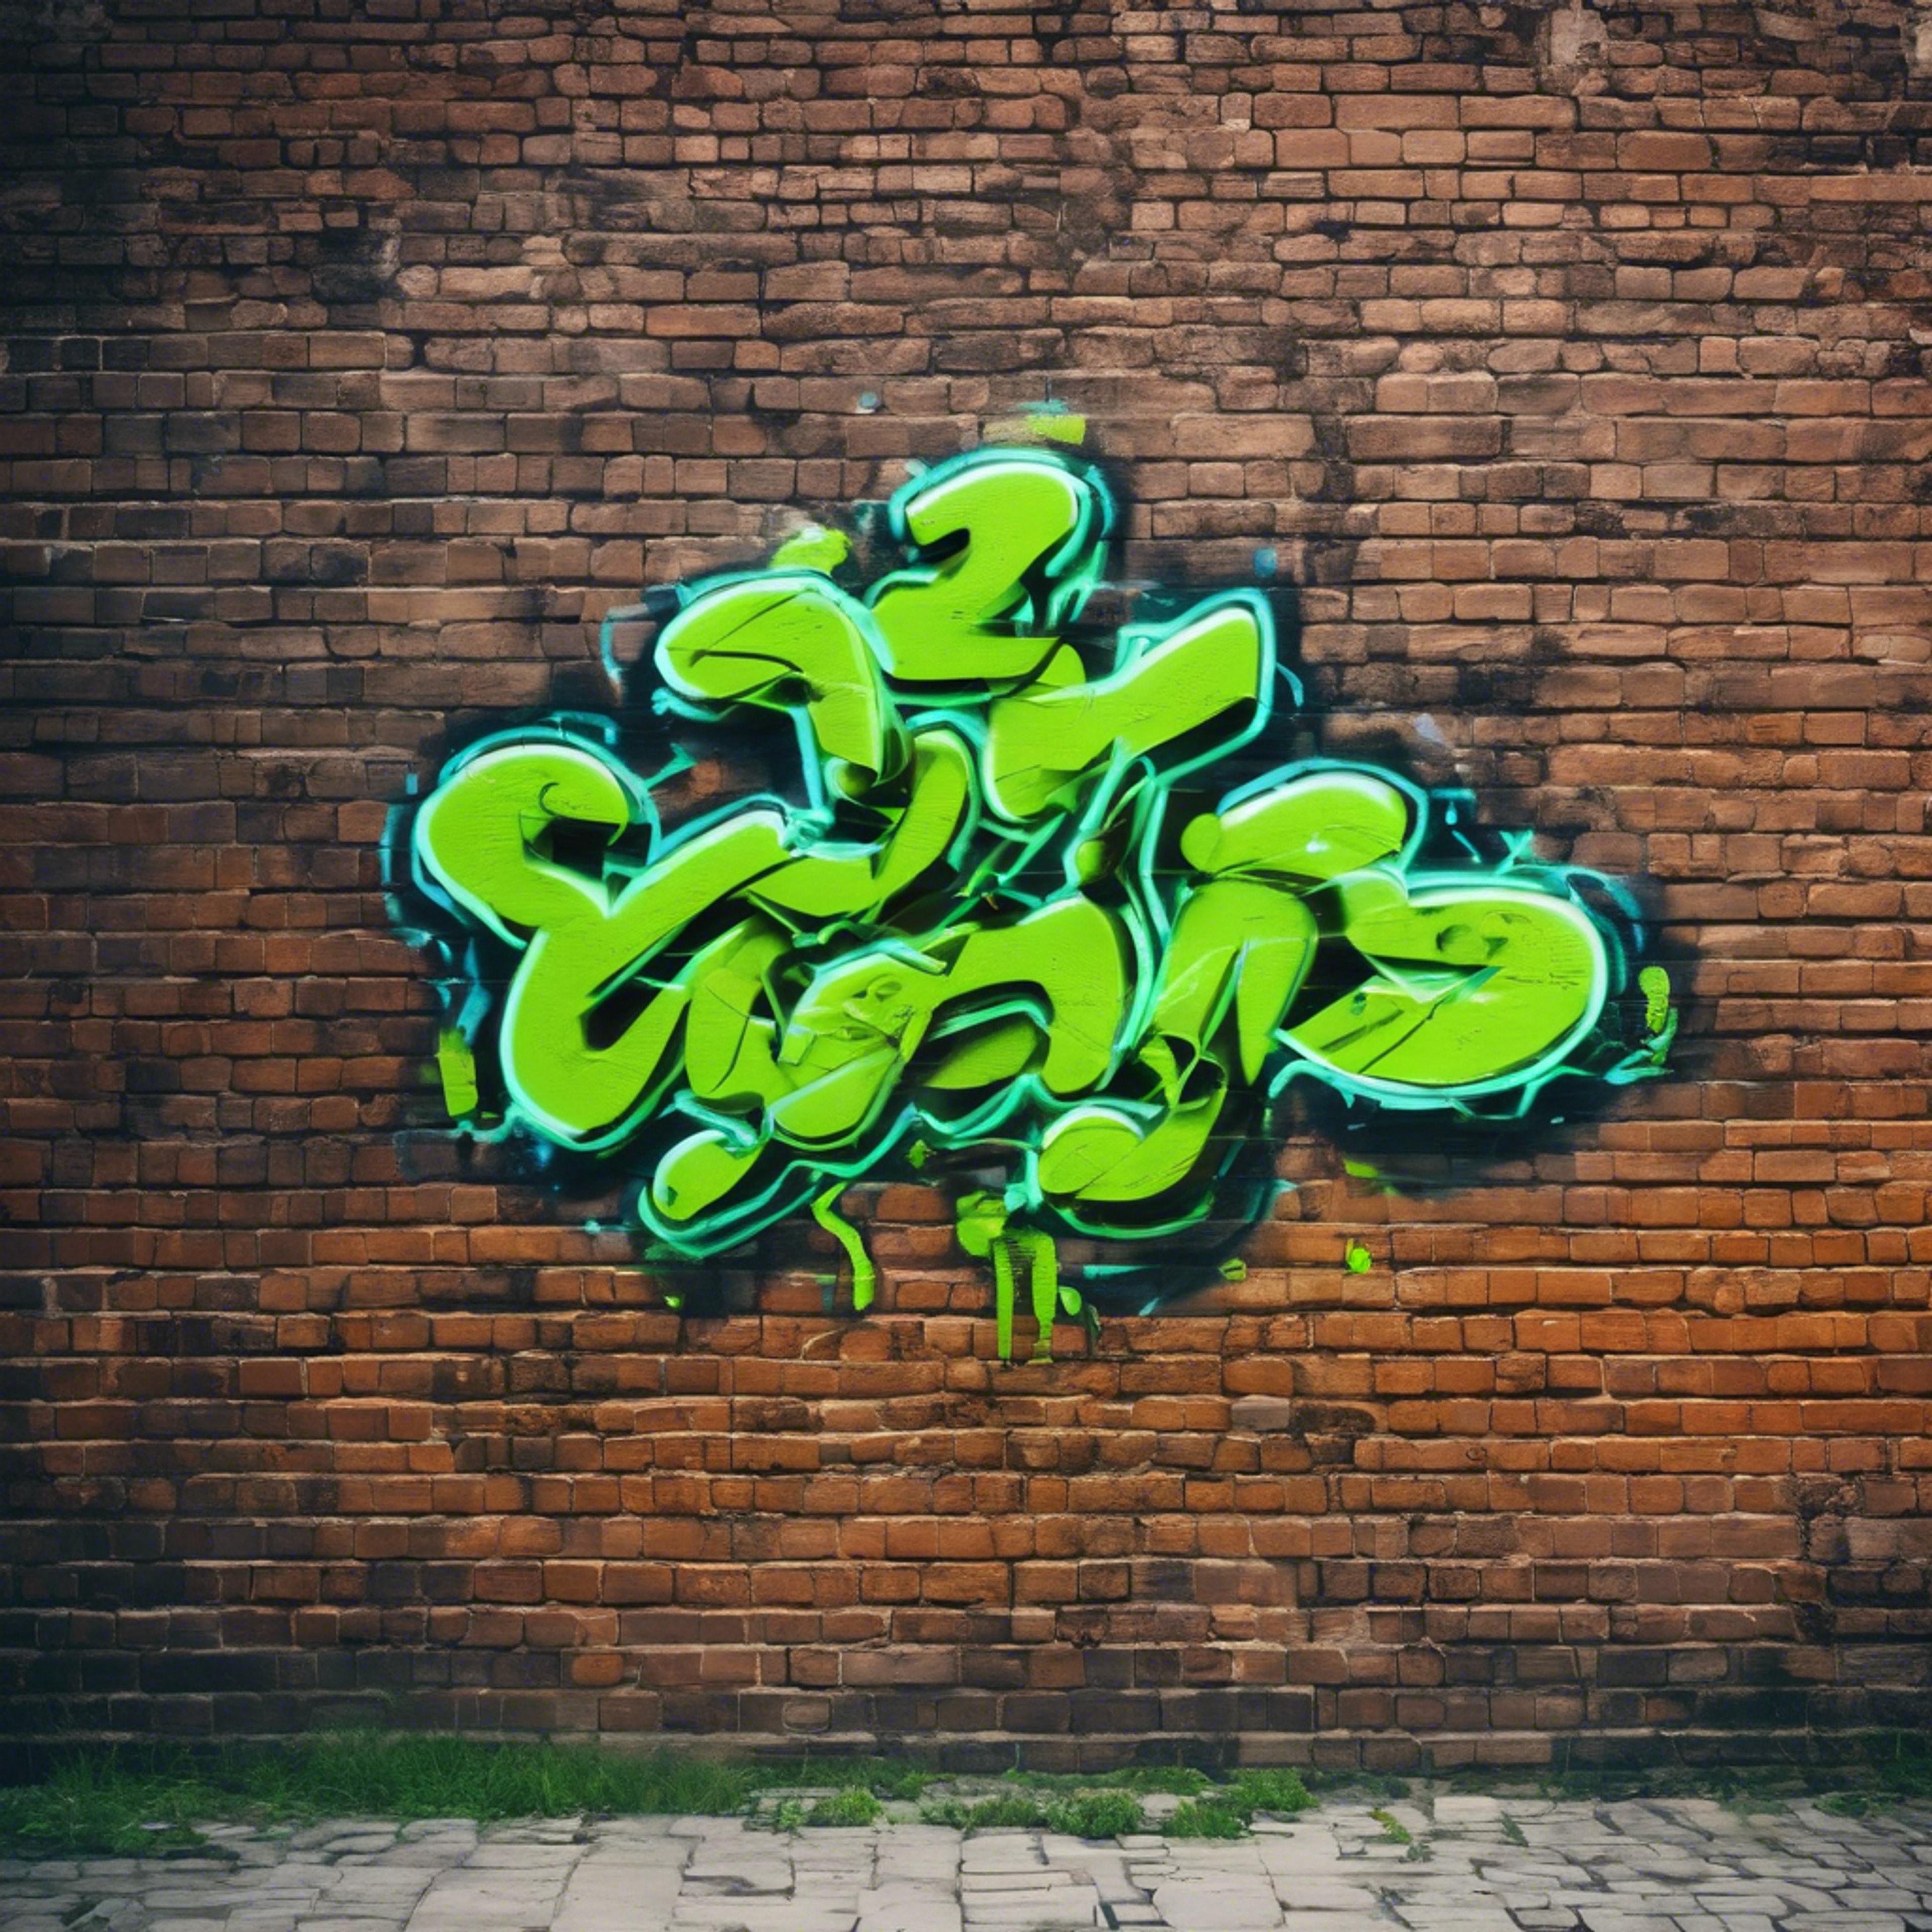 Cool neon green graffiti on an old brick wall in an urban setting. Tapeta[8032604dbabf4a1691c6]